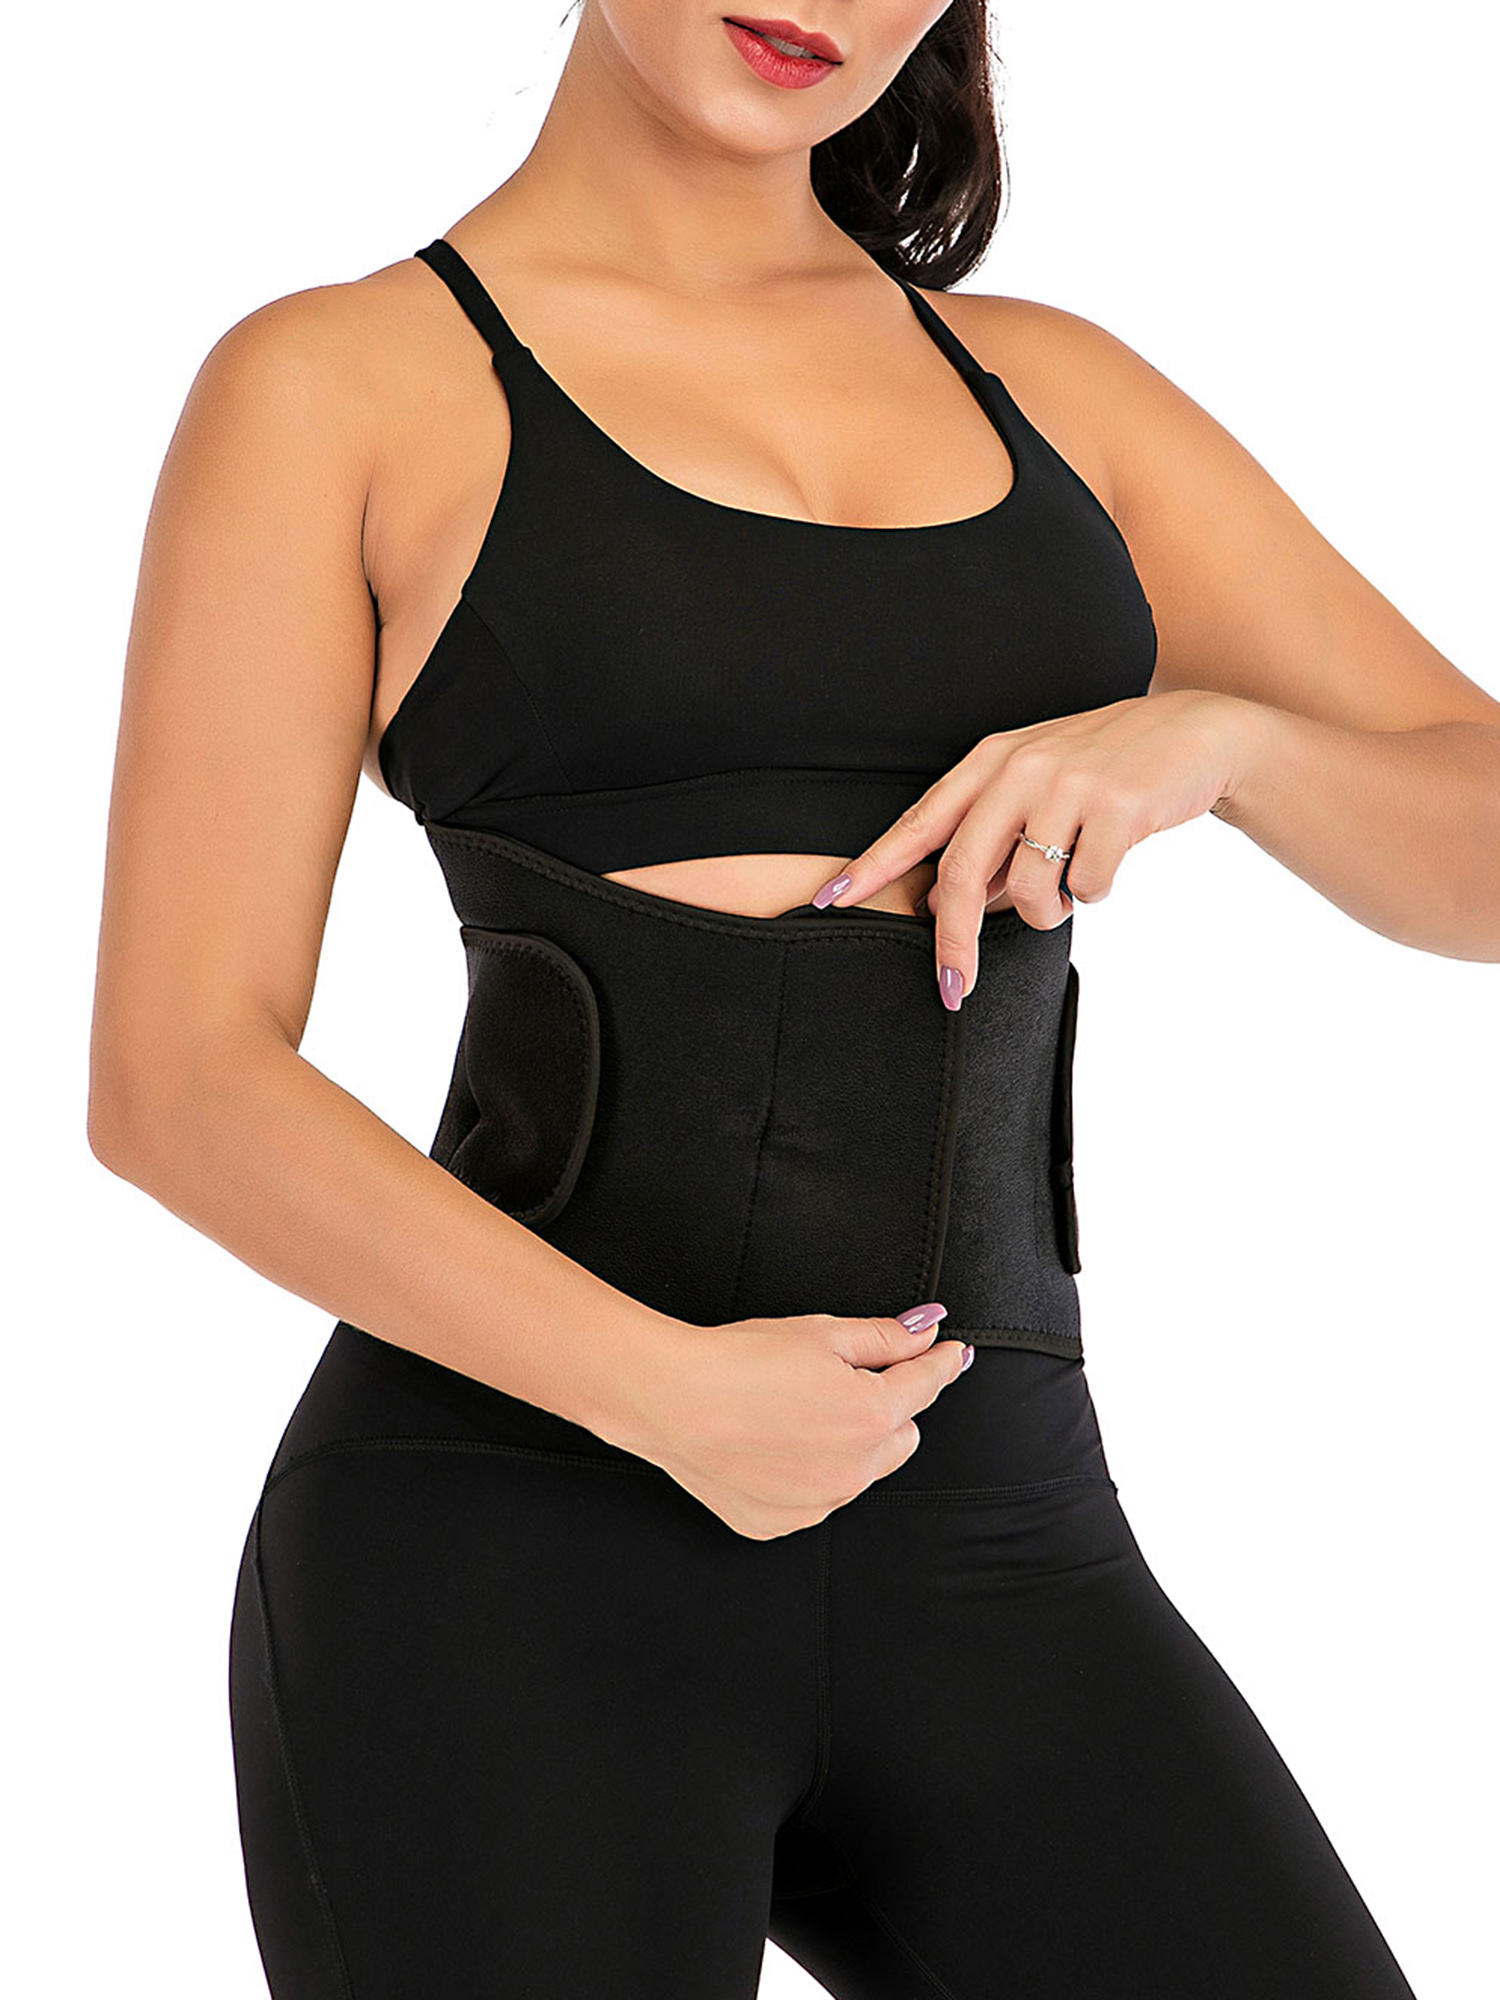 FANNYC Women Waist Trainer Corset Belts Neoprene Tummy Control